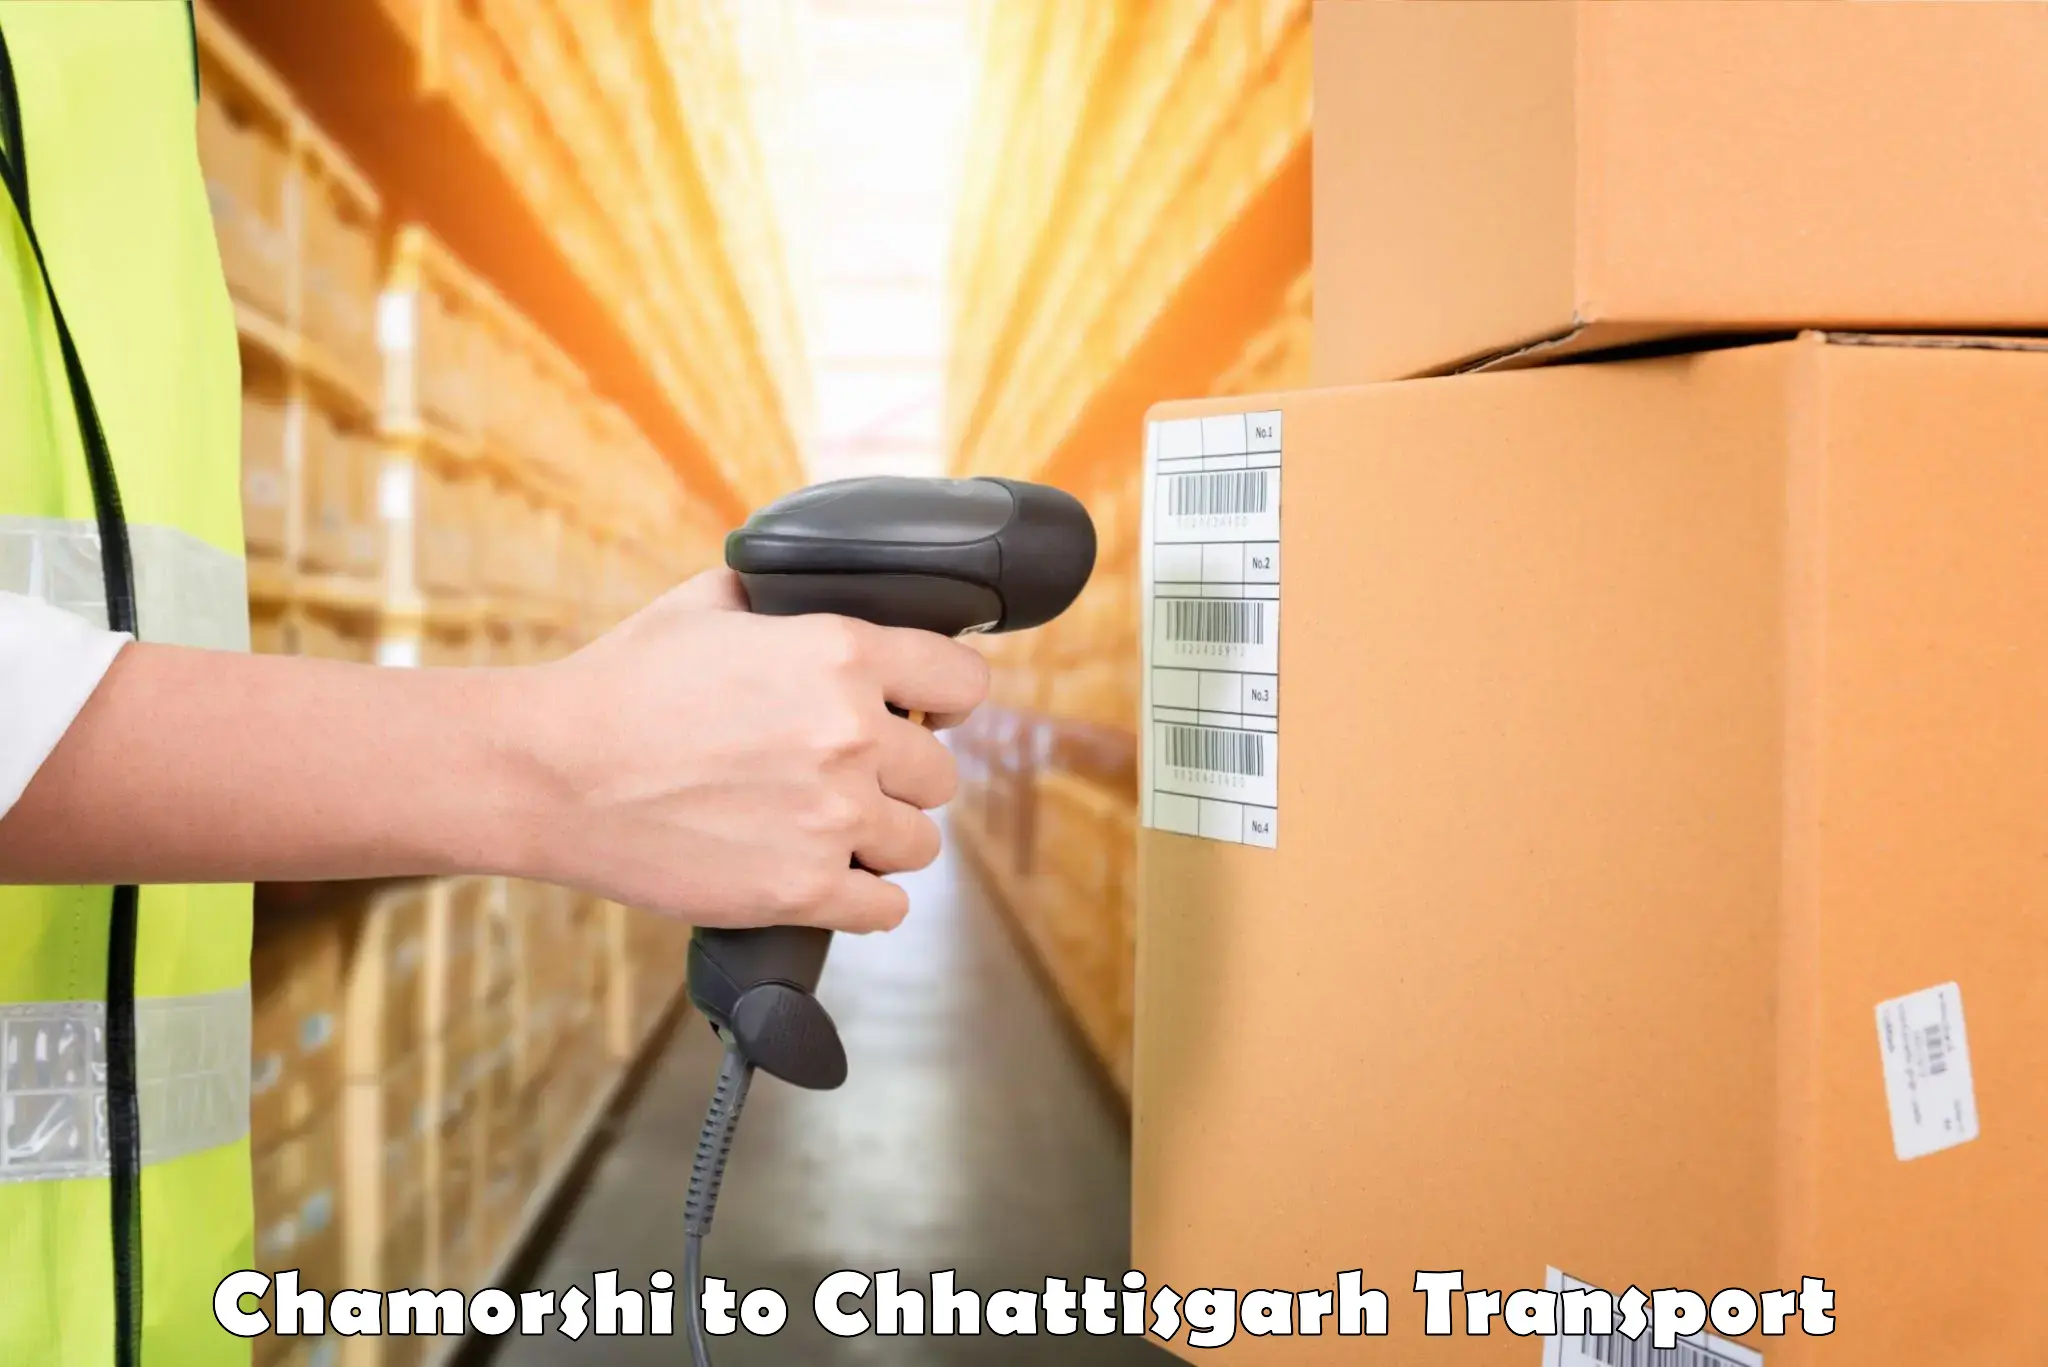 Truck transport companies in India Chamorshi to Nagri